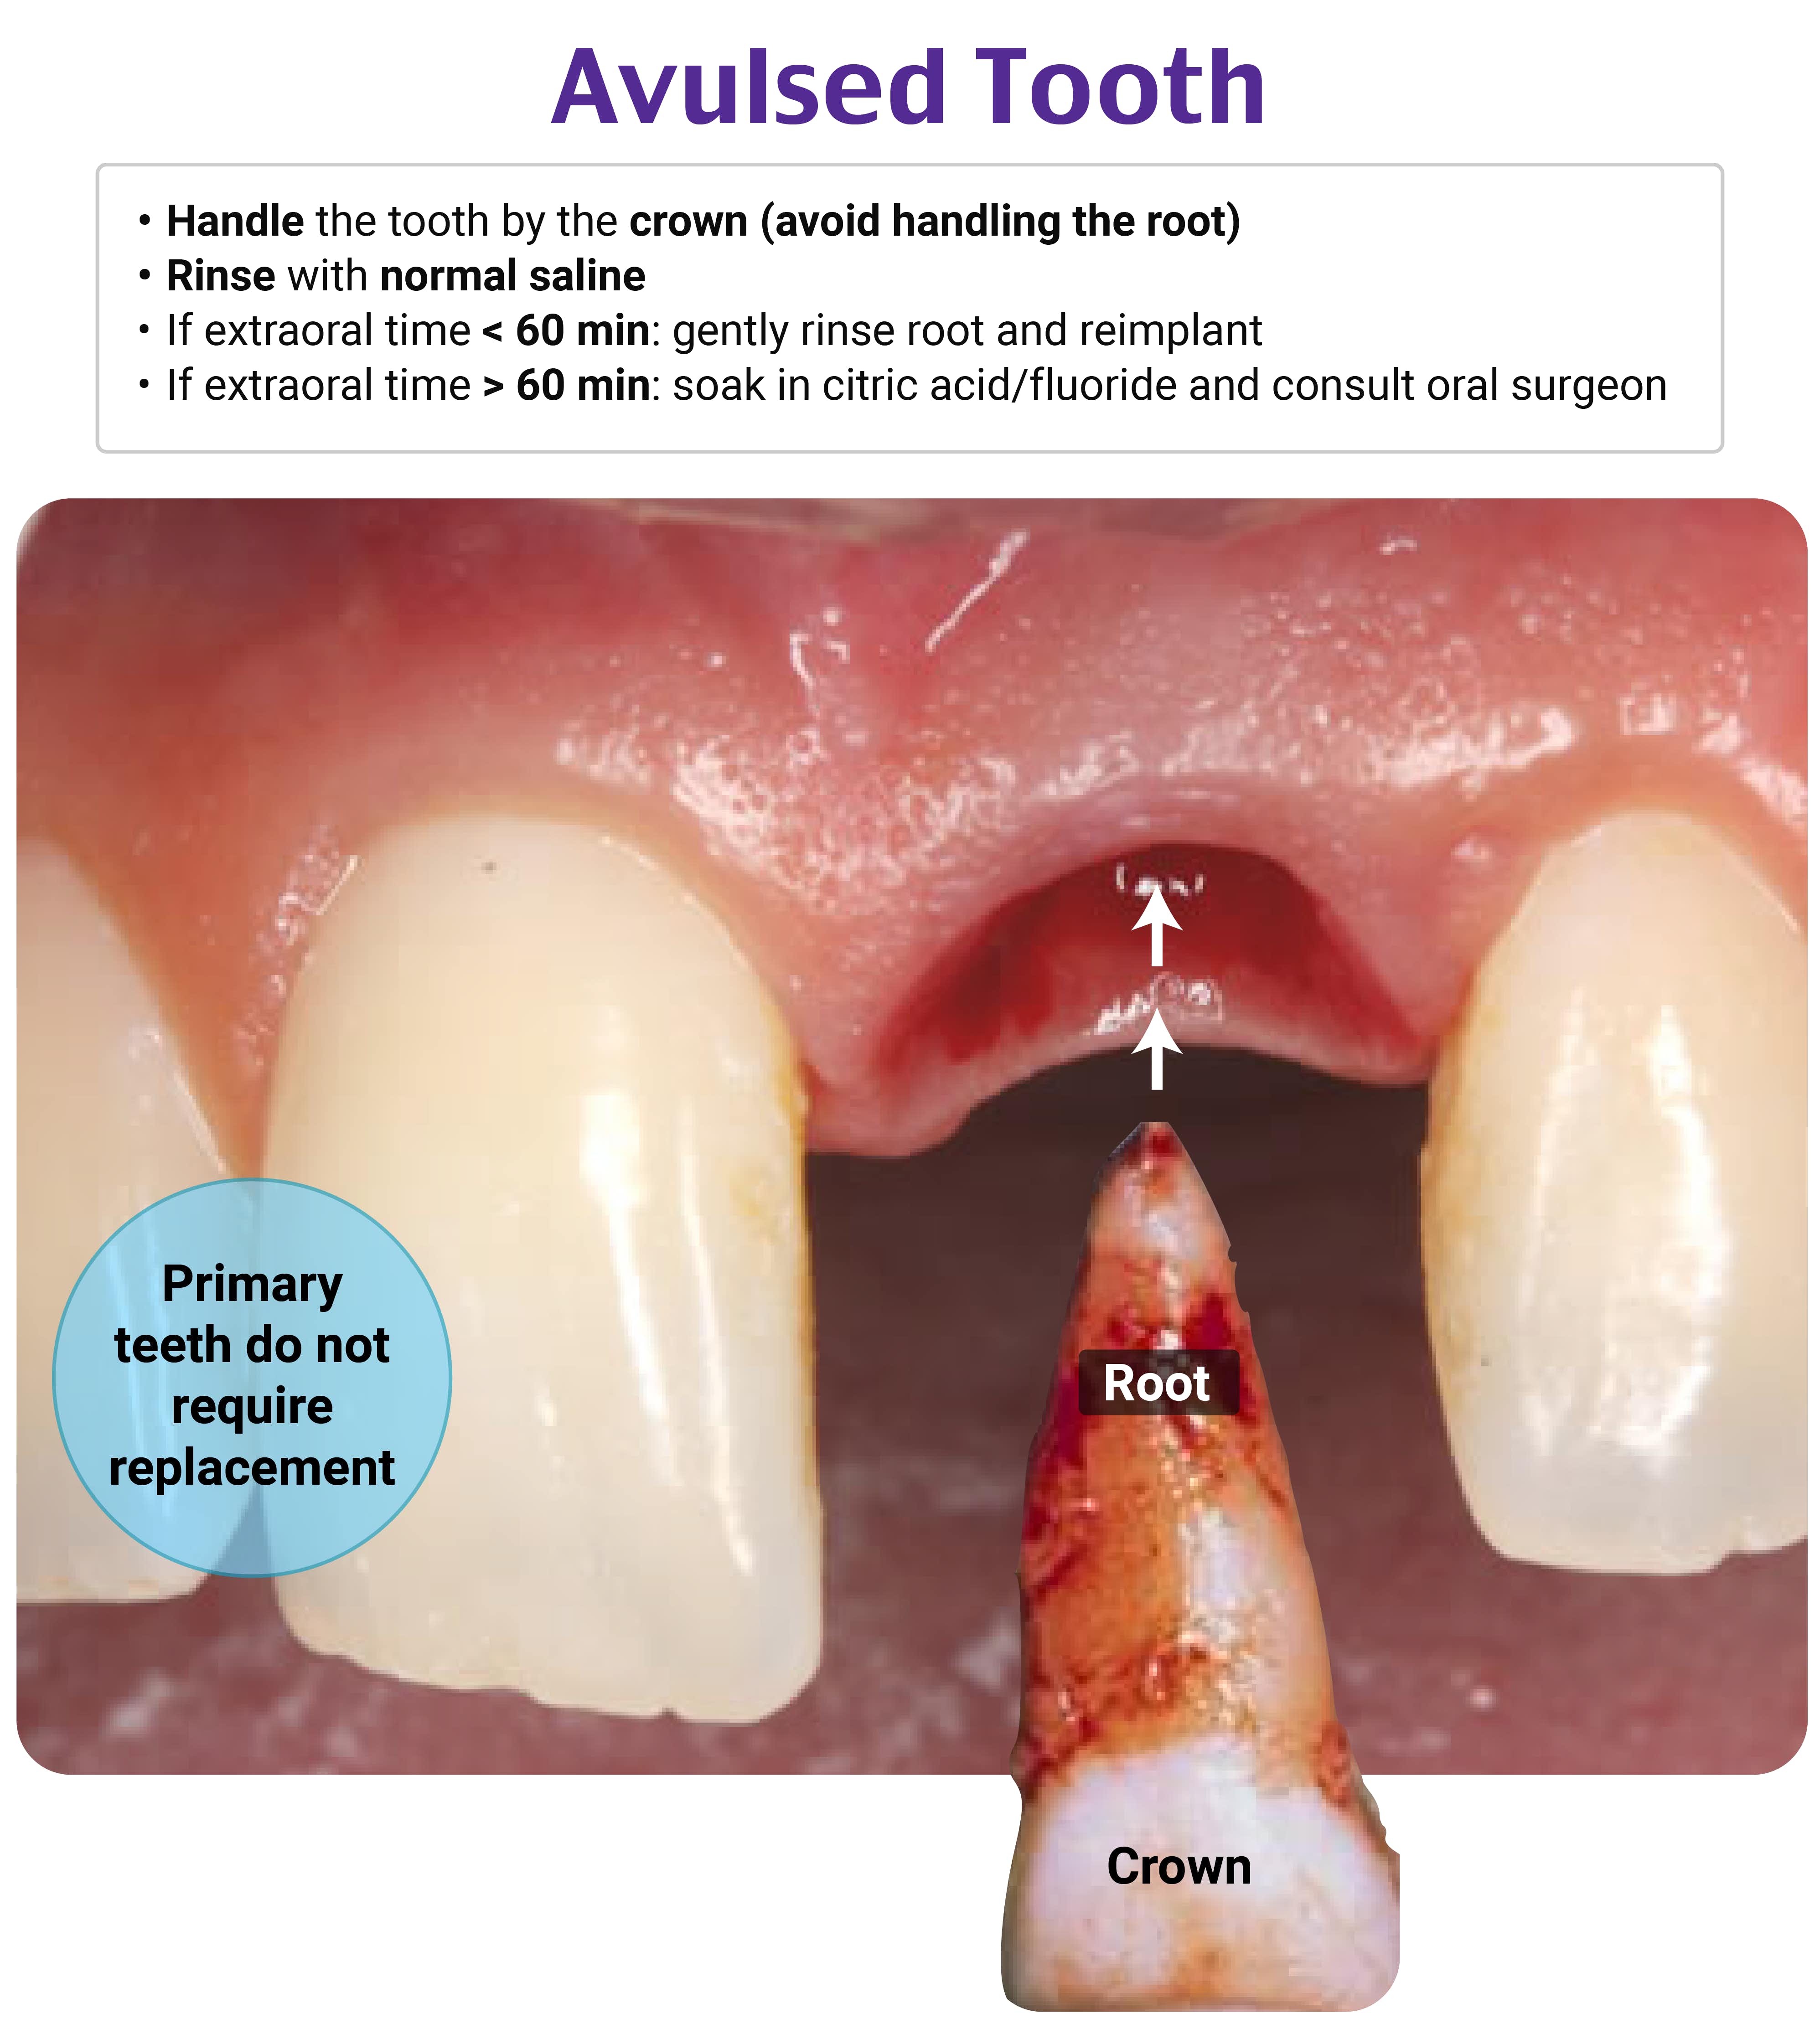 ddba575243bb44fea061df3a351979c5_Image - Dental Avulsion, Tooth Avulsion, Primary teeth, Avulsed @8x